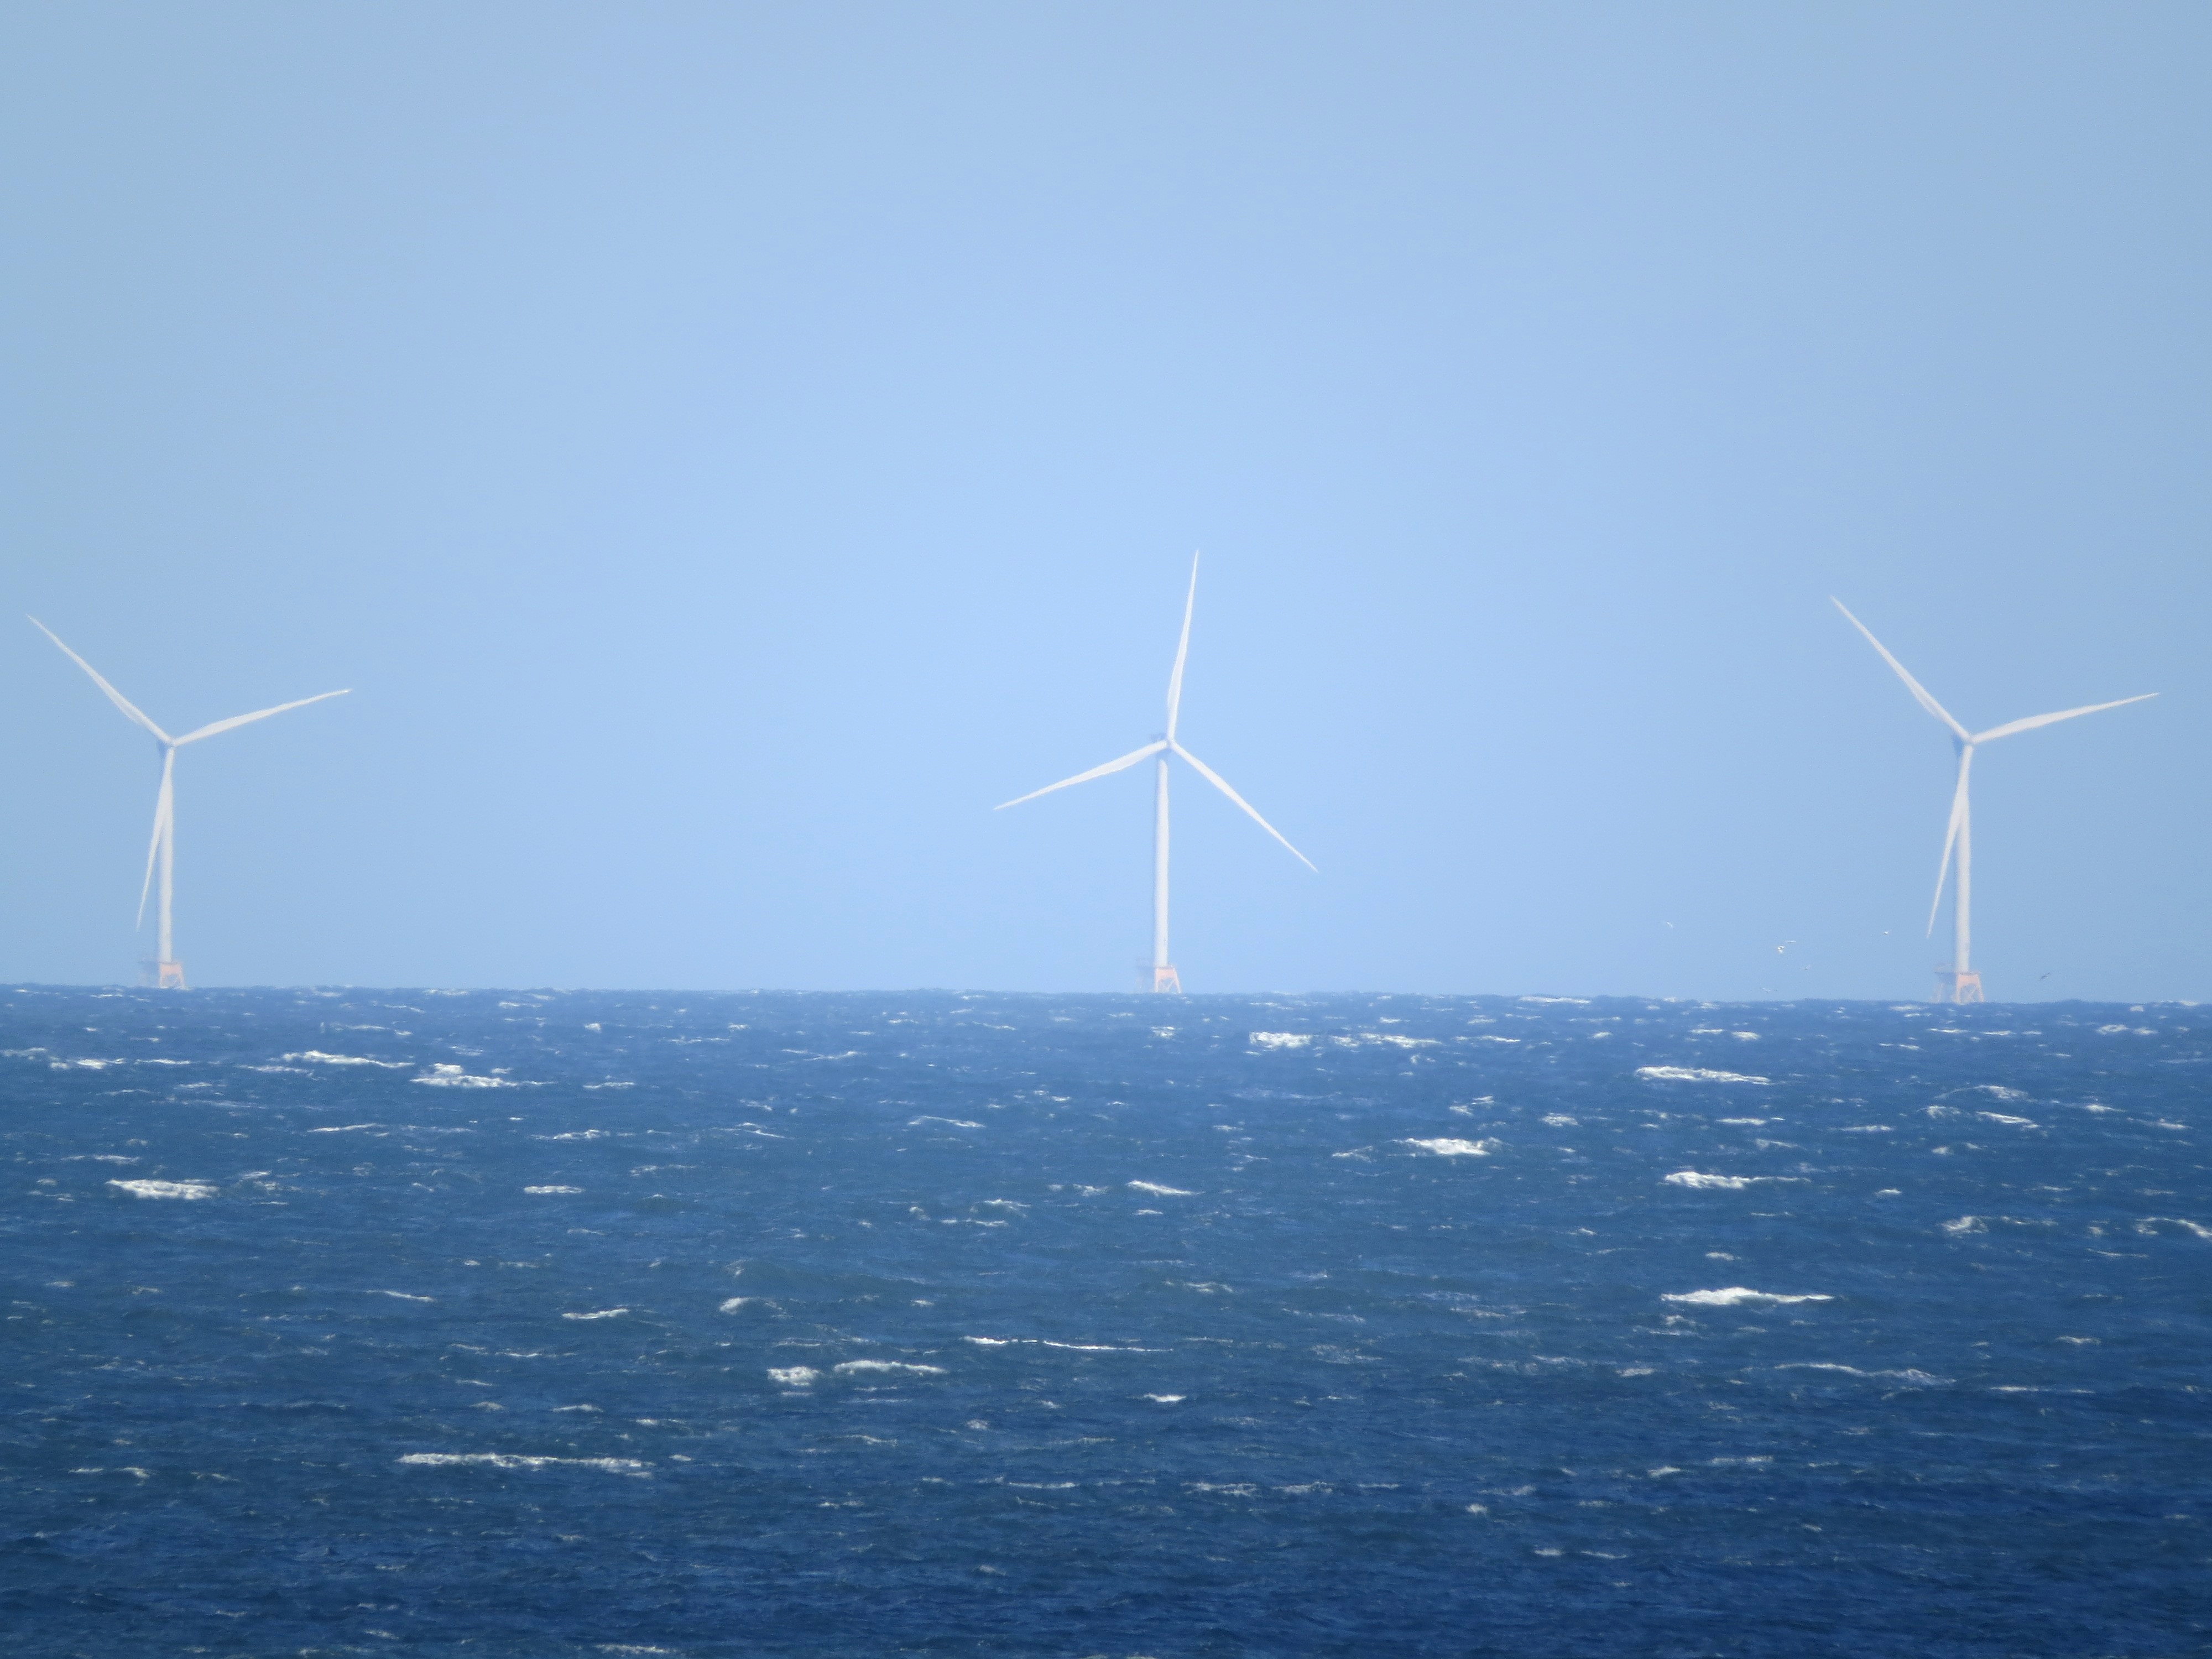 Block Island wind farm as seen from Montauk Point, New York